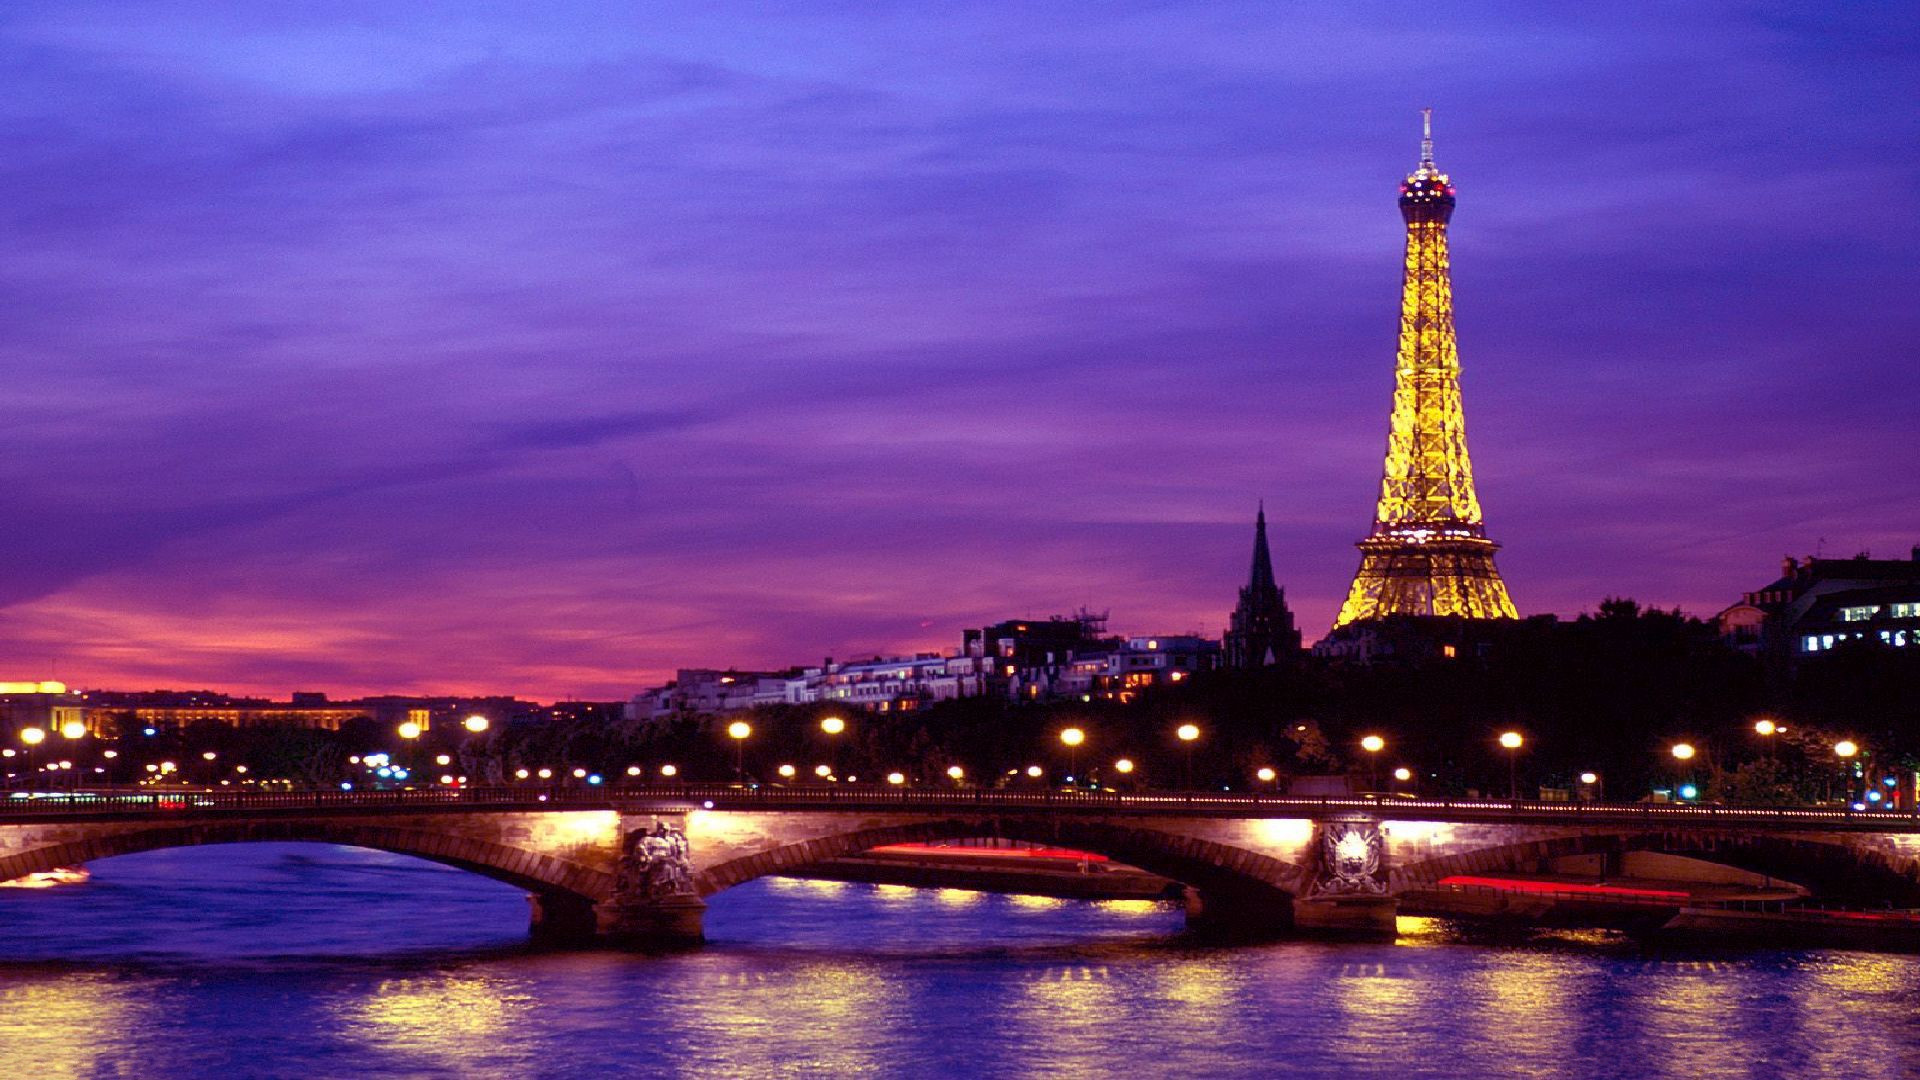 Eiffel Tower At Night Wallpaper.